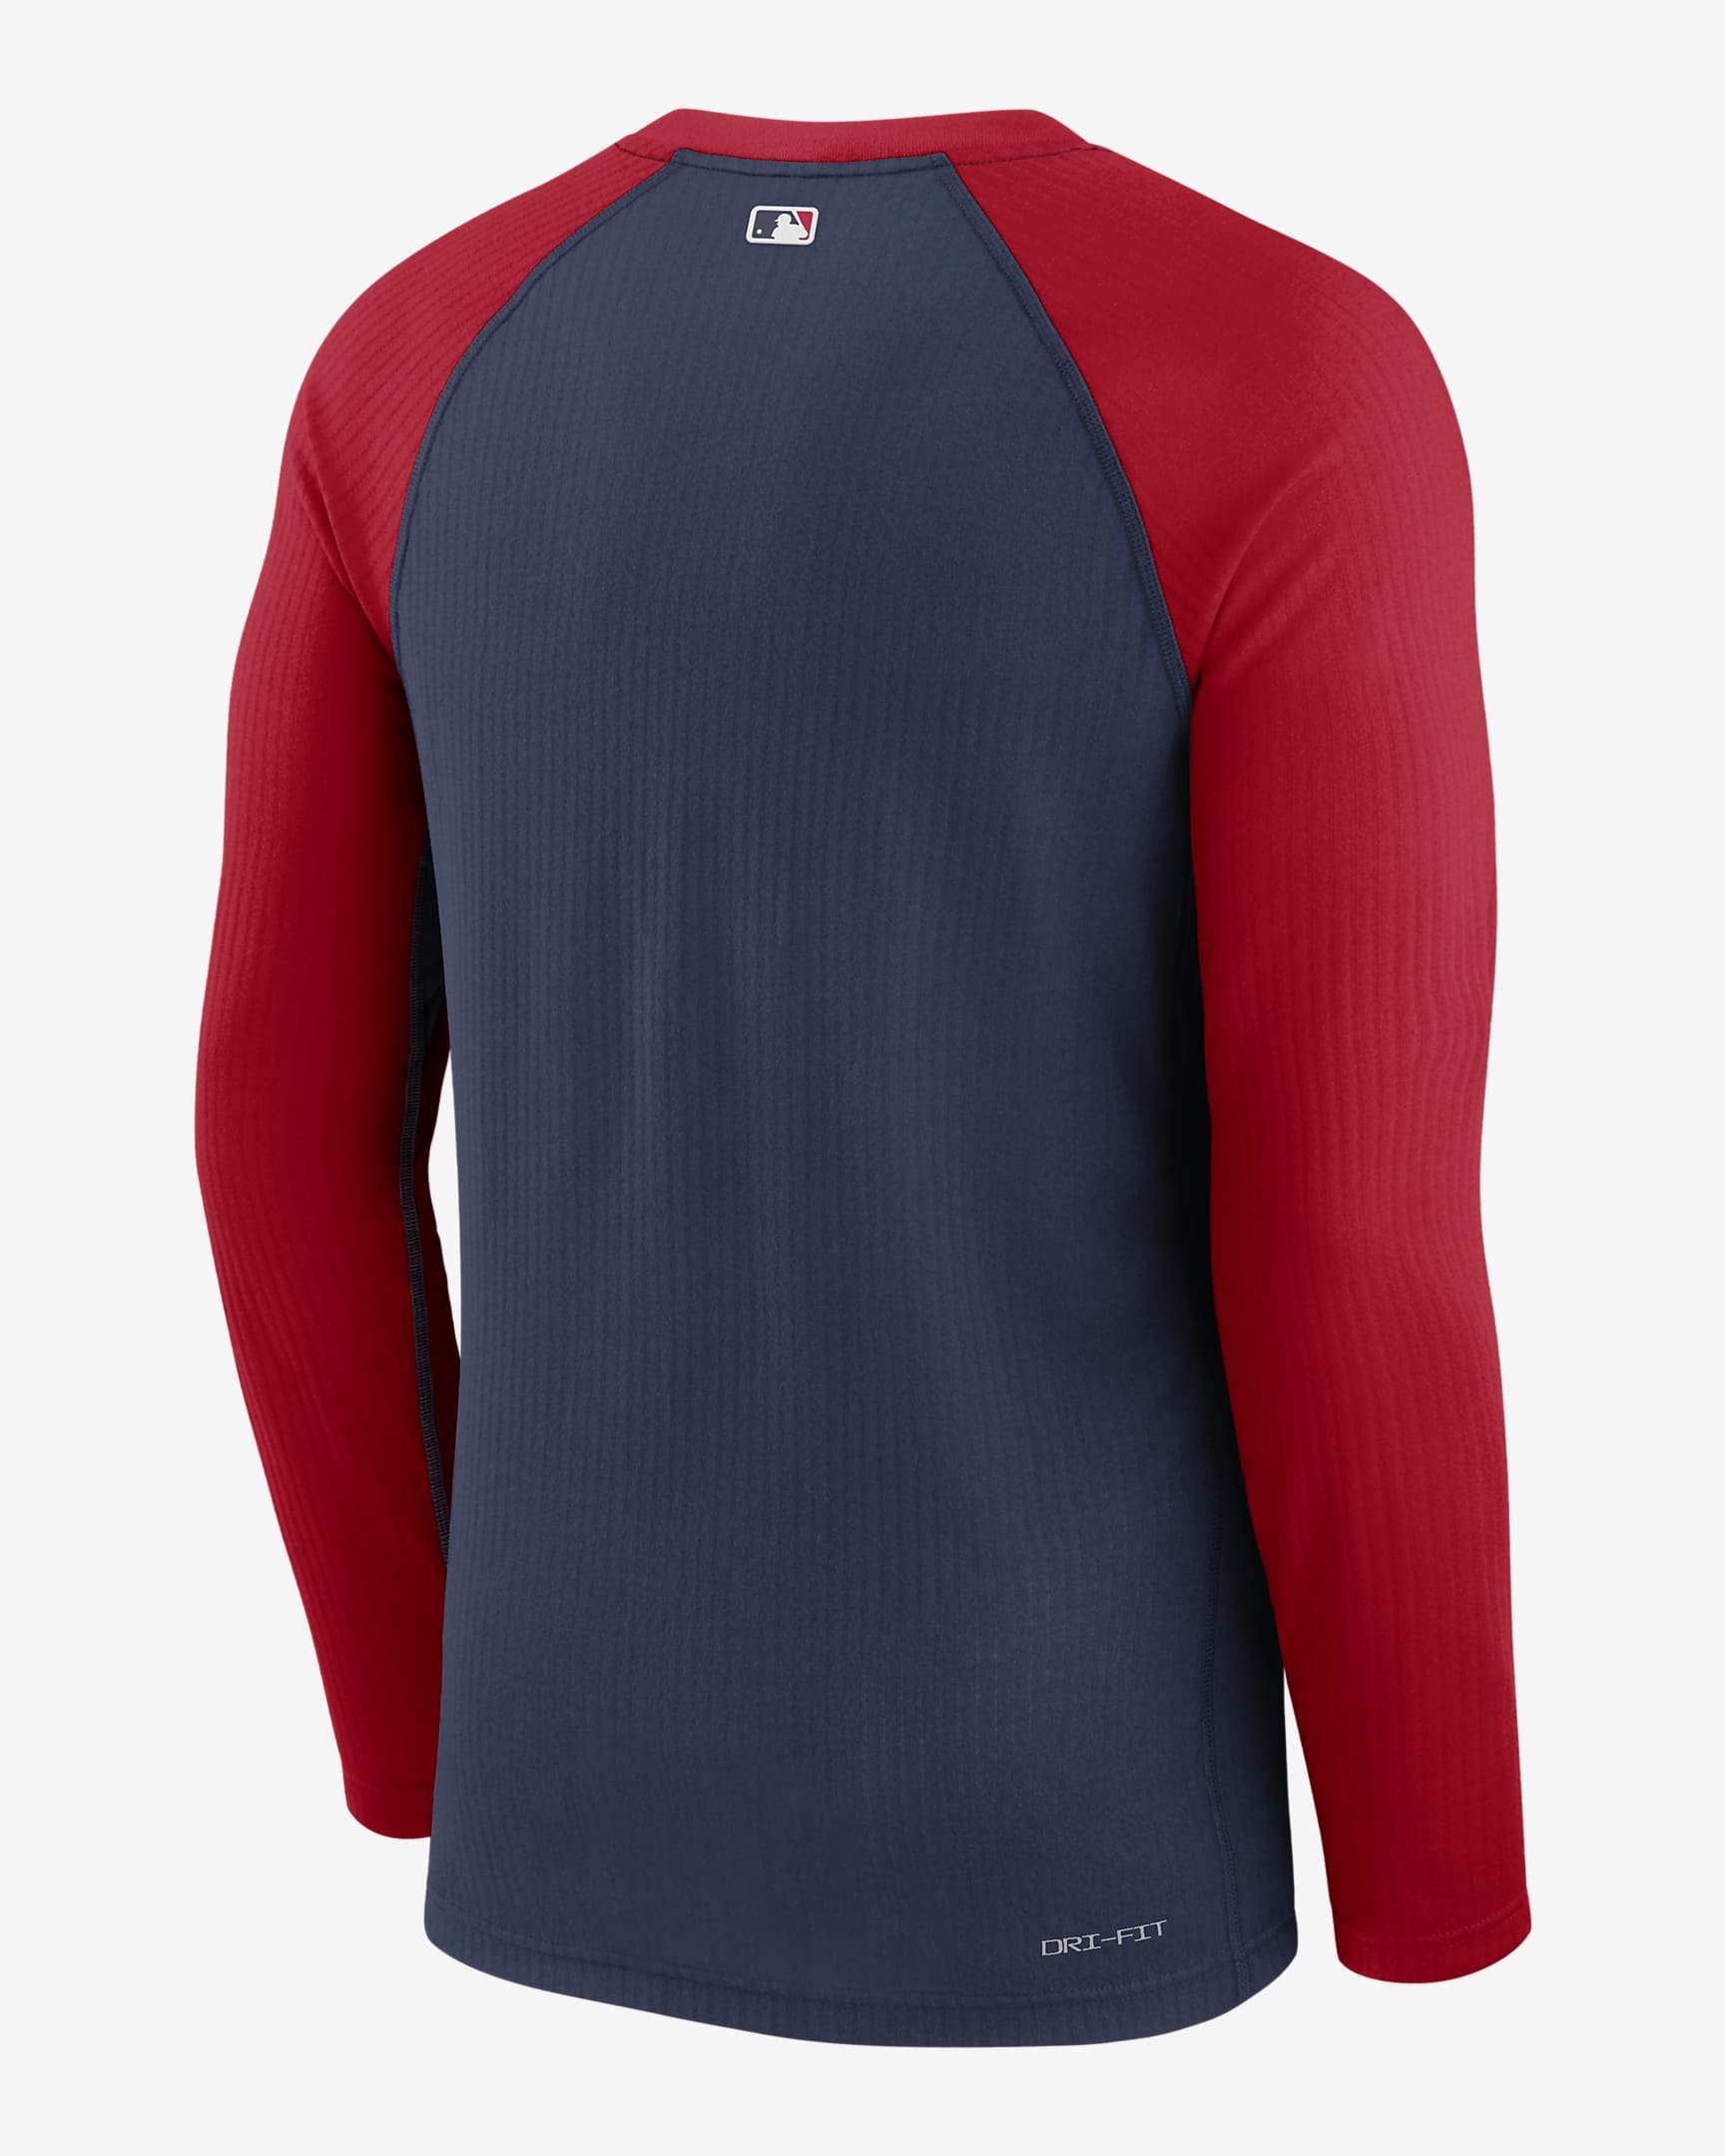 Nike Dri-FIT Game (MLB St. Louis Cardinals) Men's Long-Sleeve T-Shirt ...